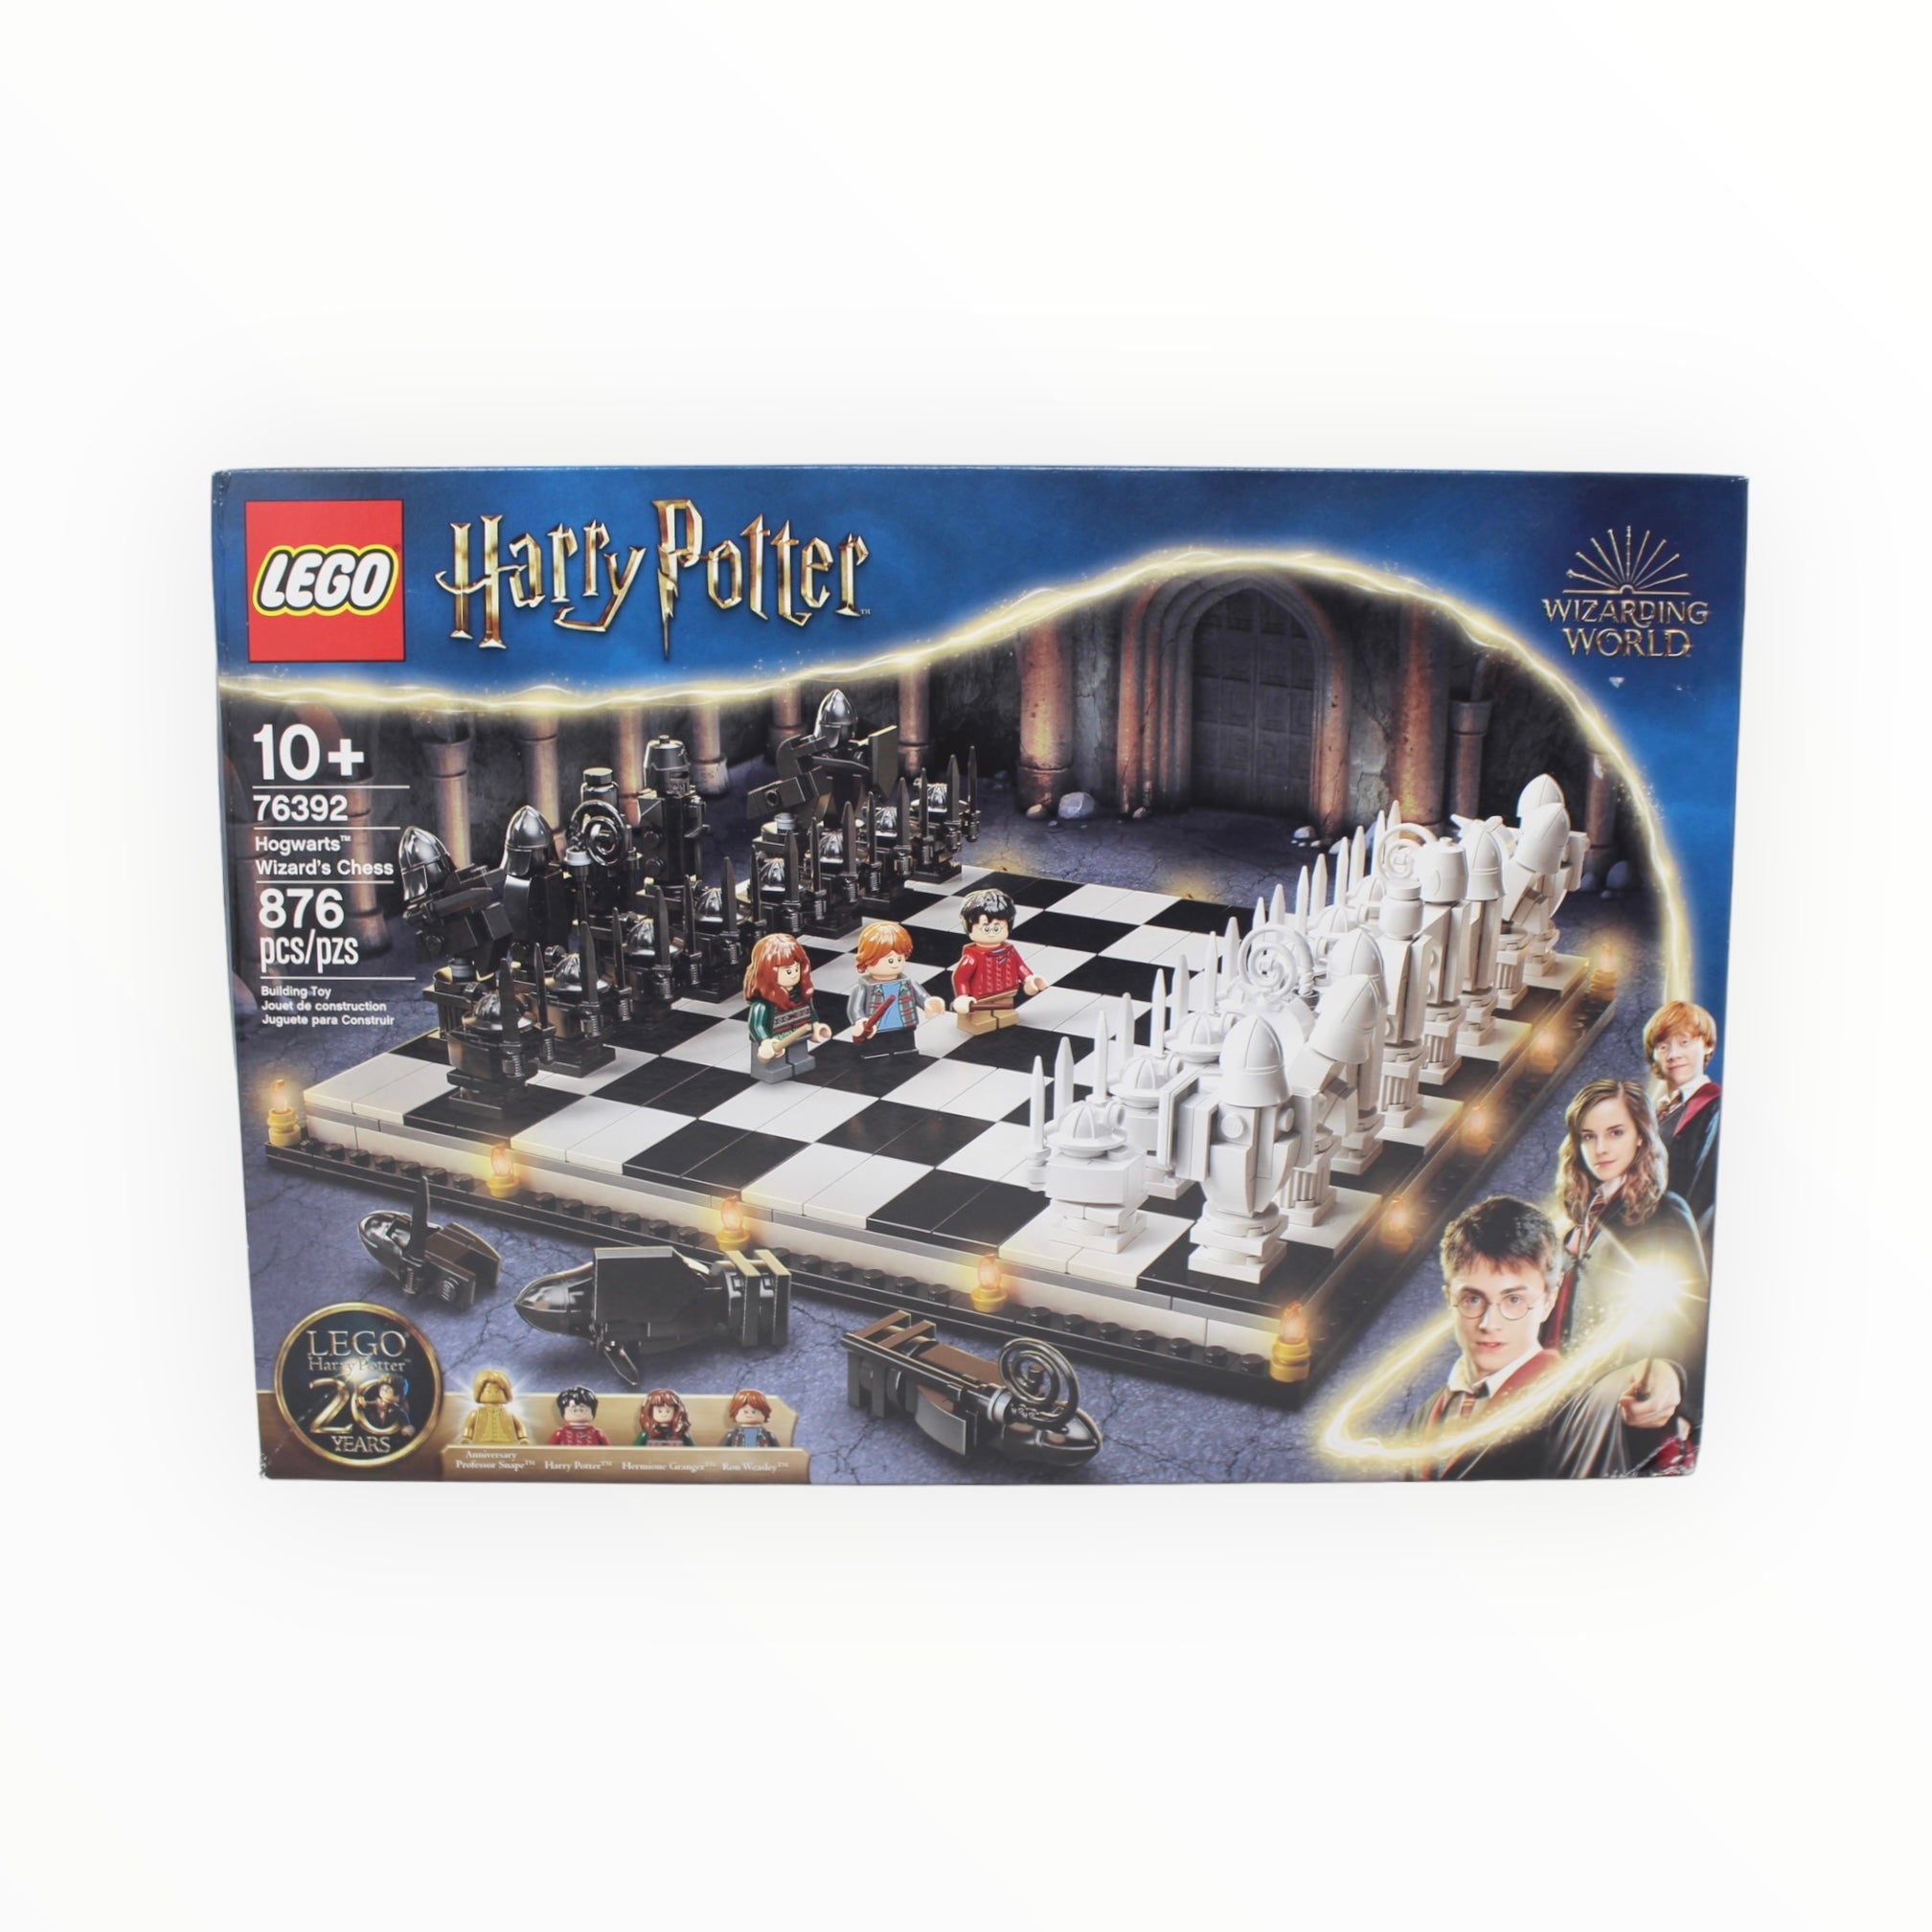 Retired Set 76392 Harry Potter Hogwarts Wizard’s Chess